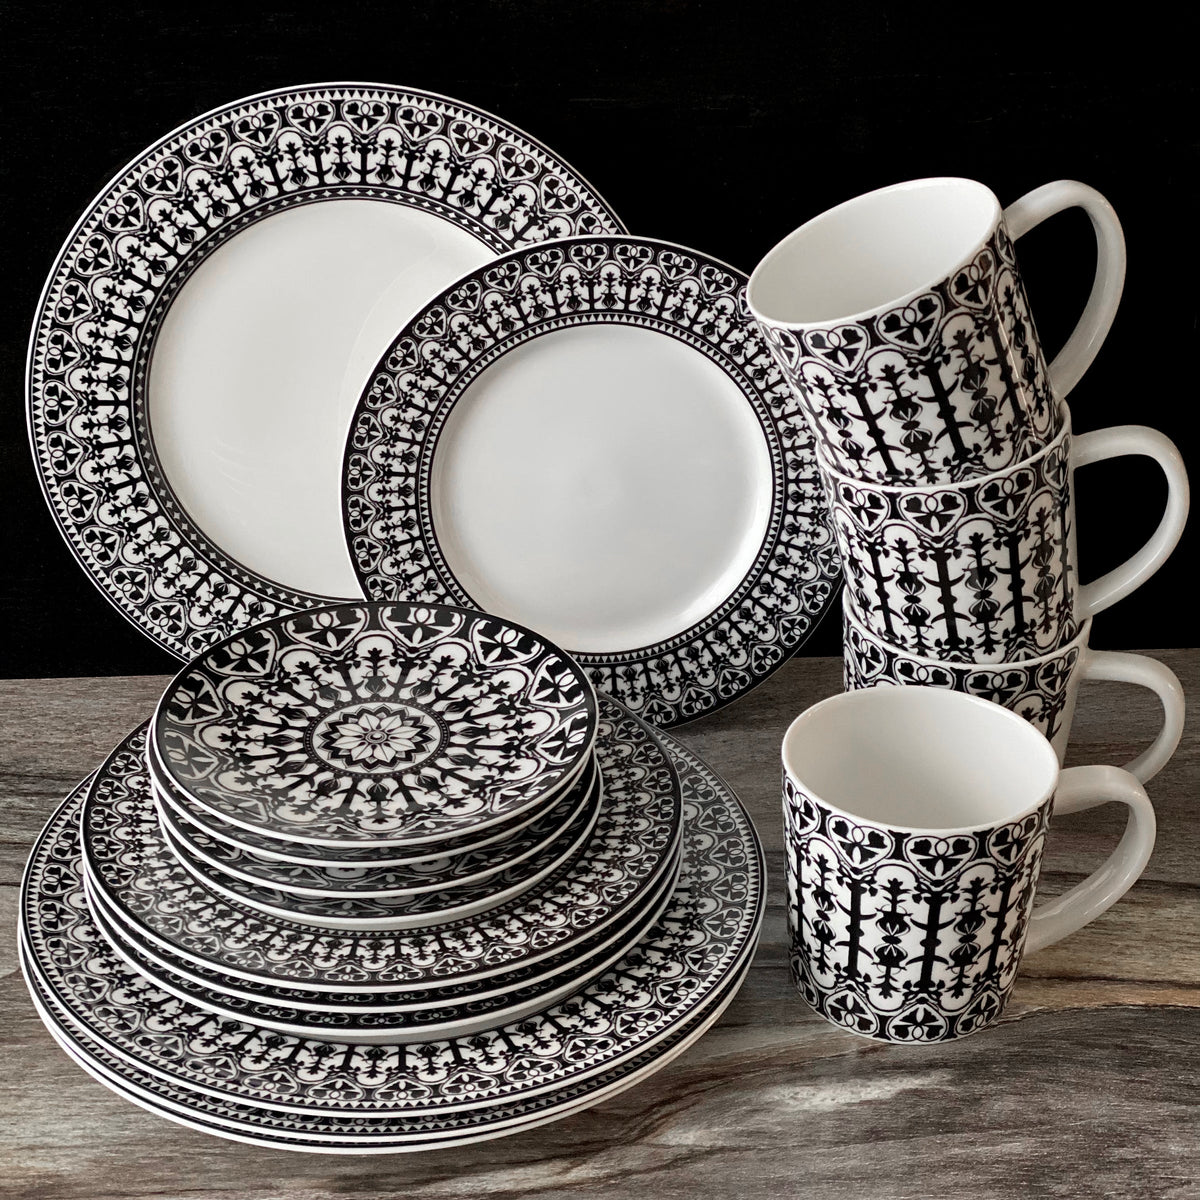 A set of Casablanca Mug Black dinnerware inspired by Caskata Artisanal Home on a table.